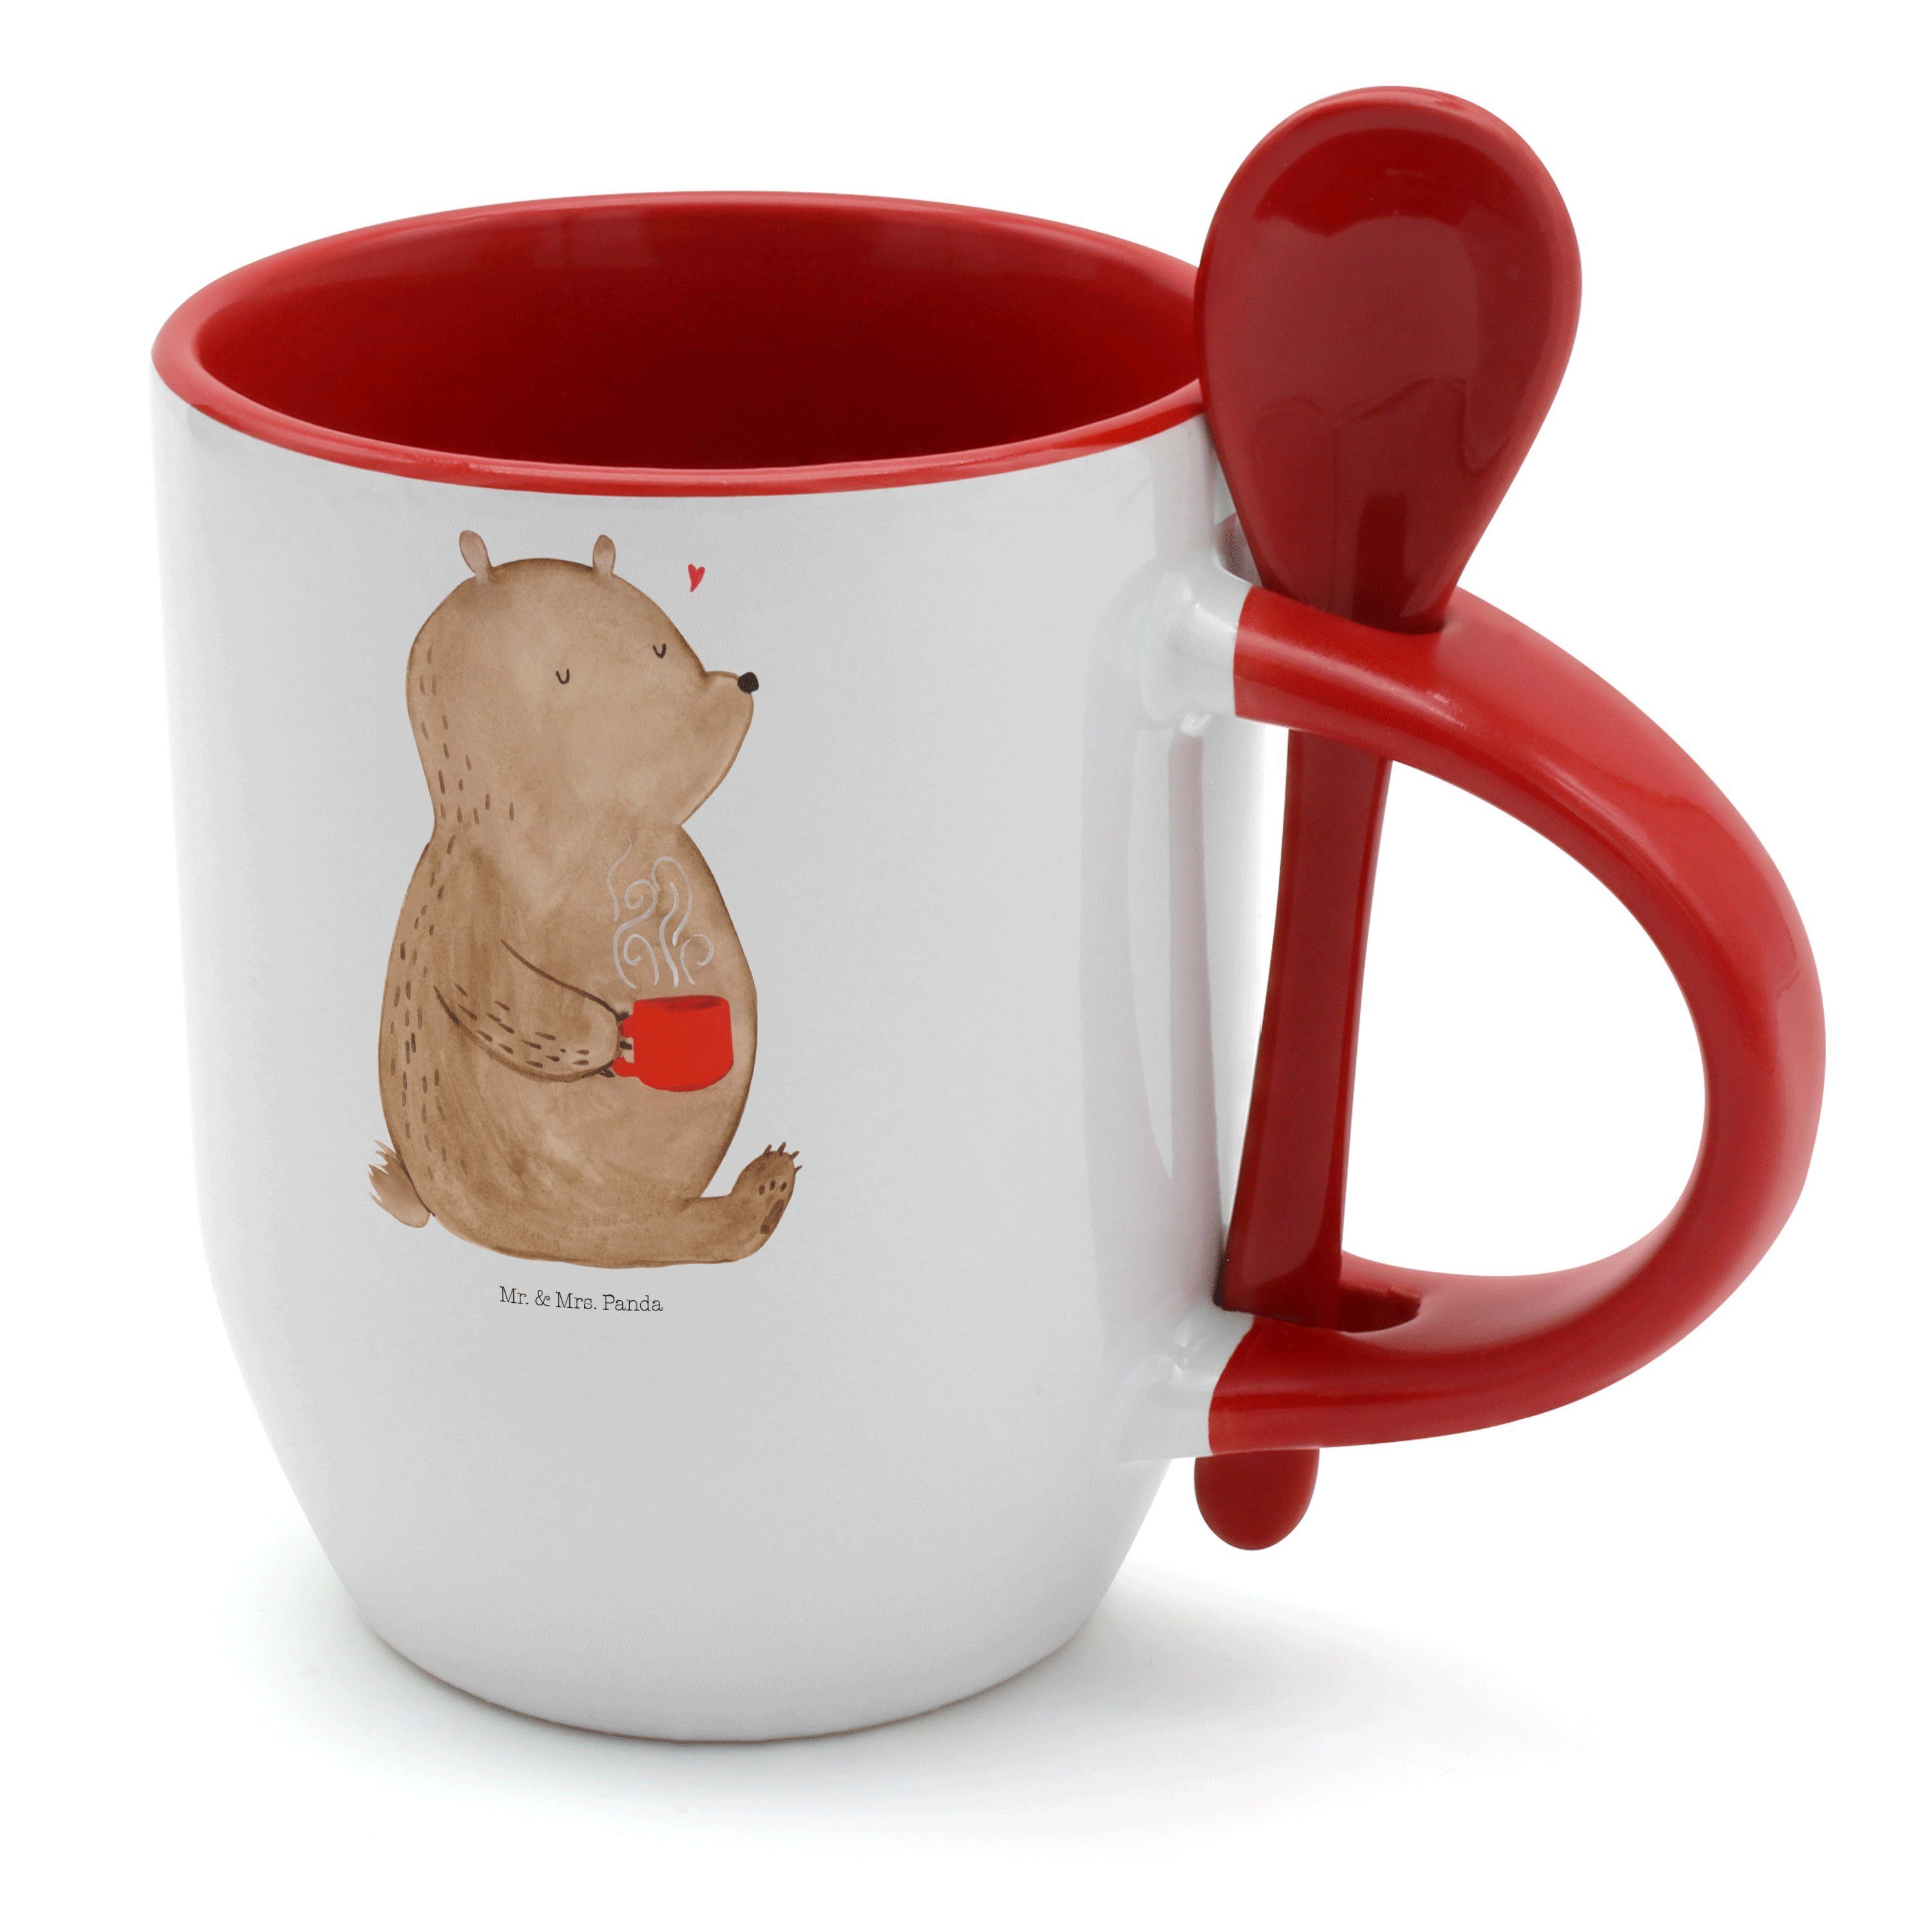 Mr. & Mrs. Panda Tasse Bär Kaffee - Weiß - Geschenk, Teddy, Tasse, Kaffeetasse, Tasse mit Sp, Keramik